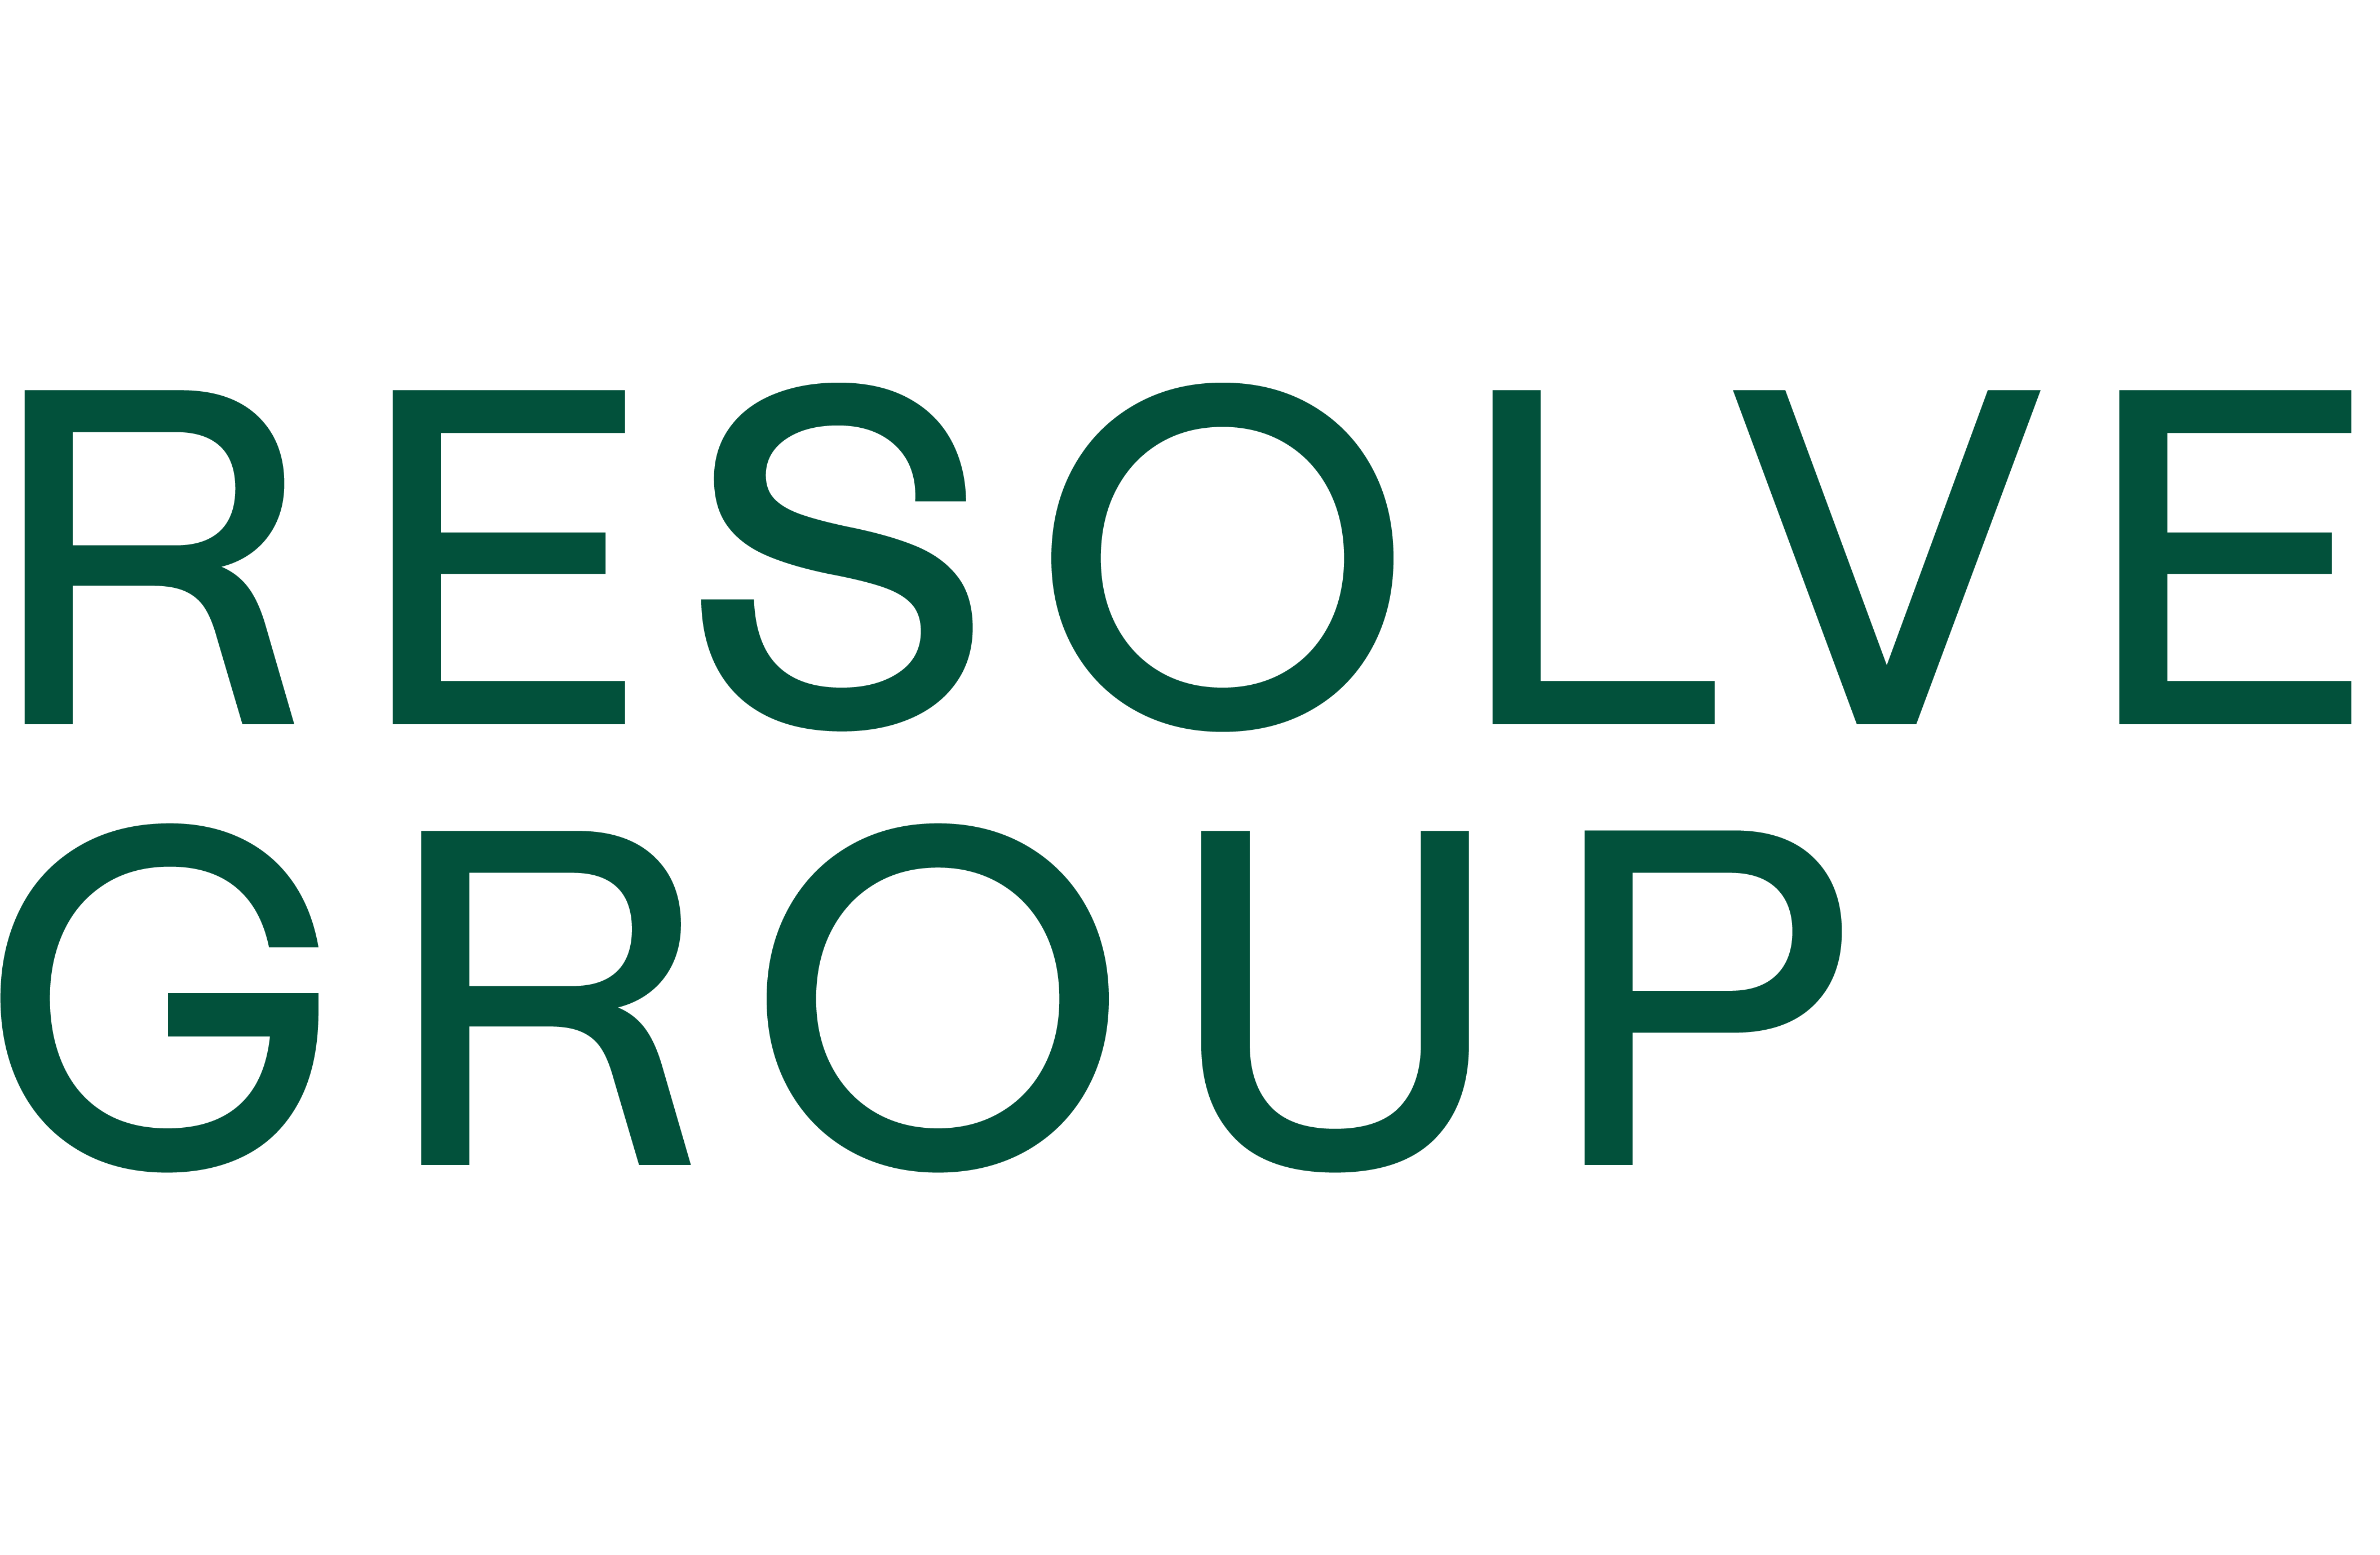 Resolve Group